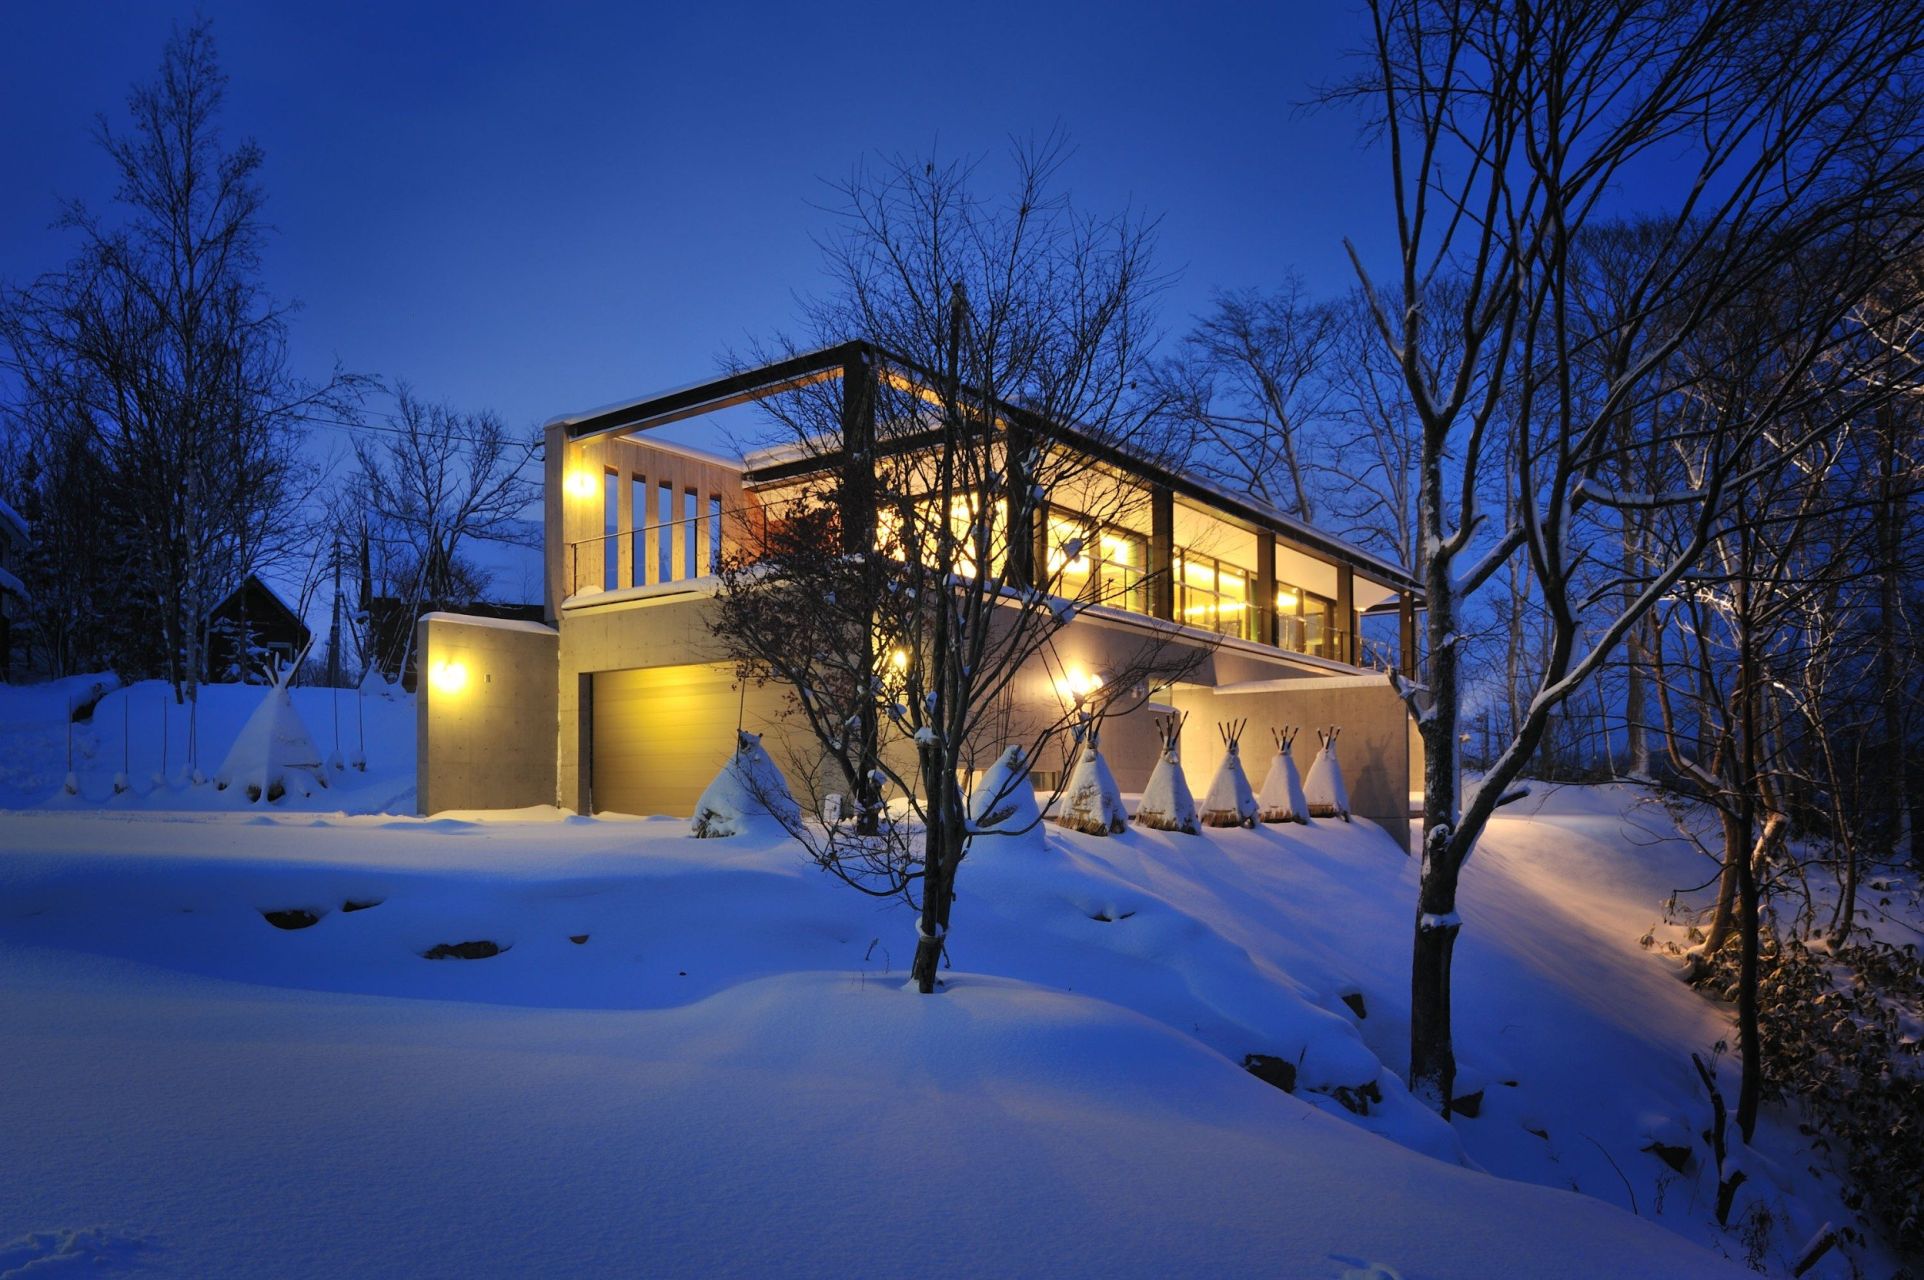 Sale Luxury house Hokkaido (044-00) 273 m²